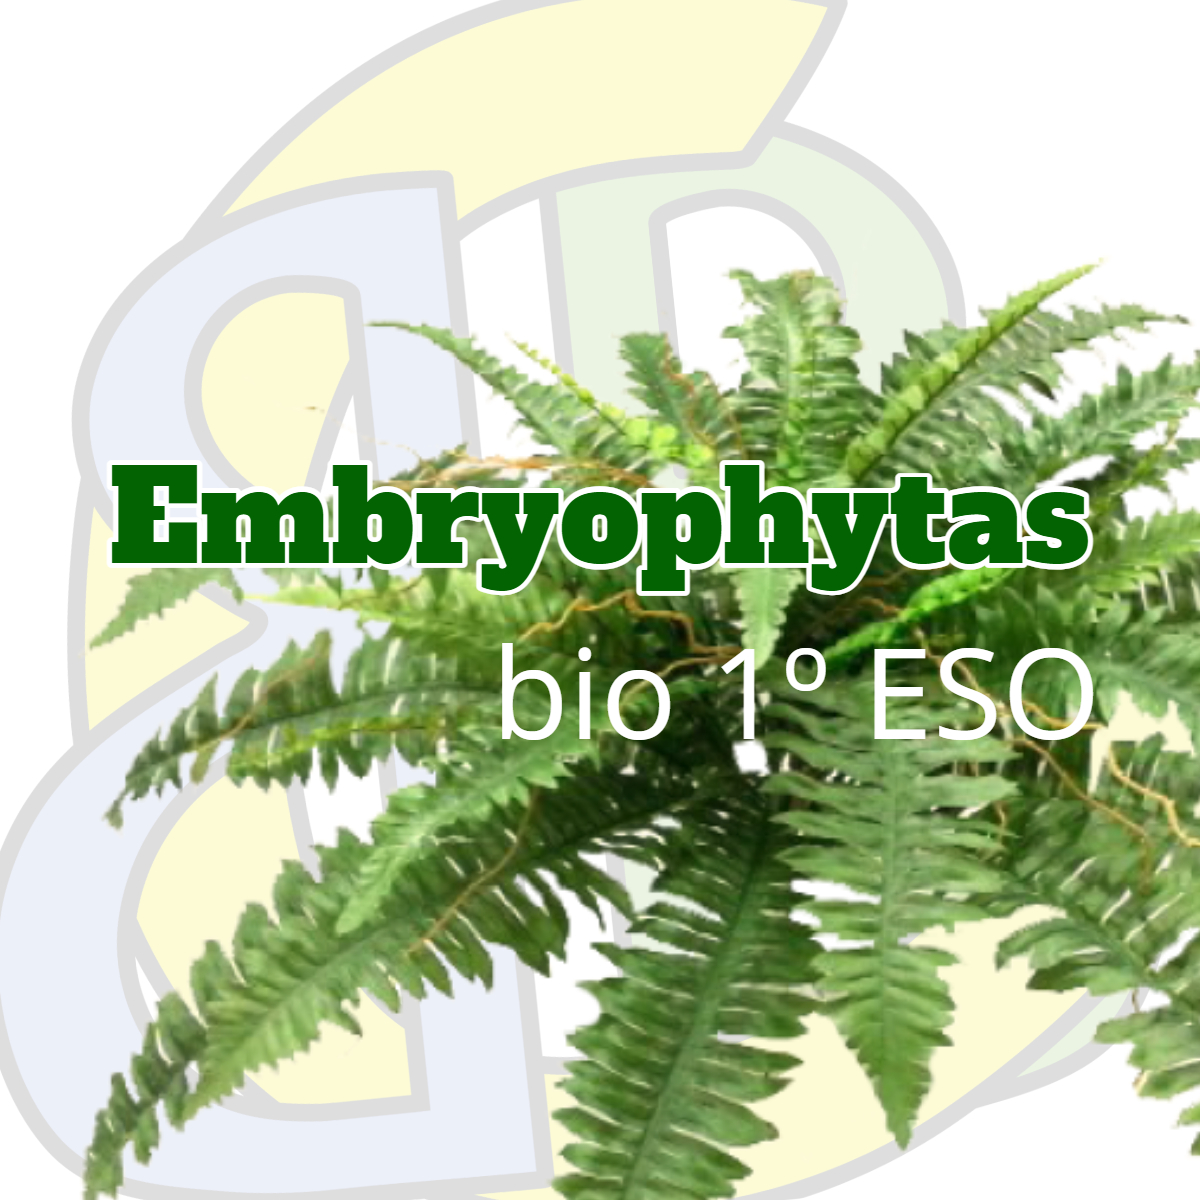 As Embryophytas